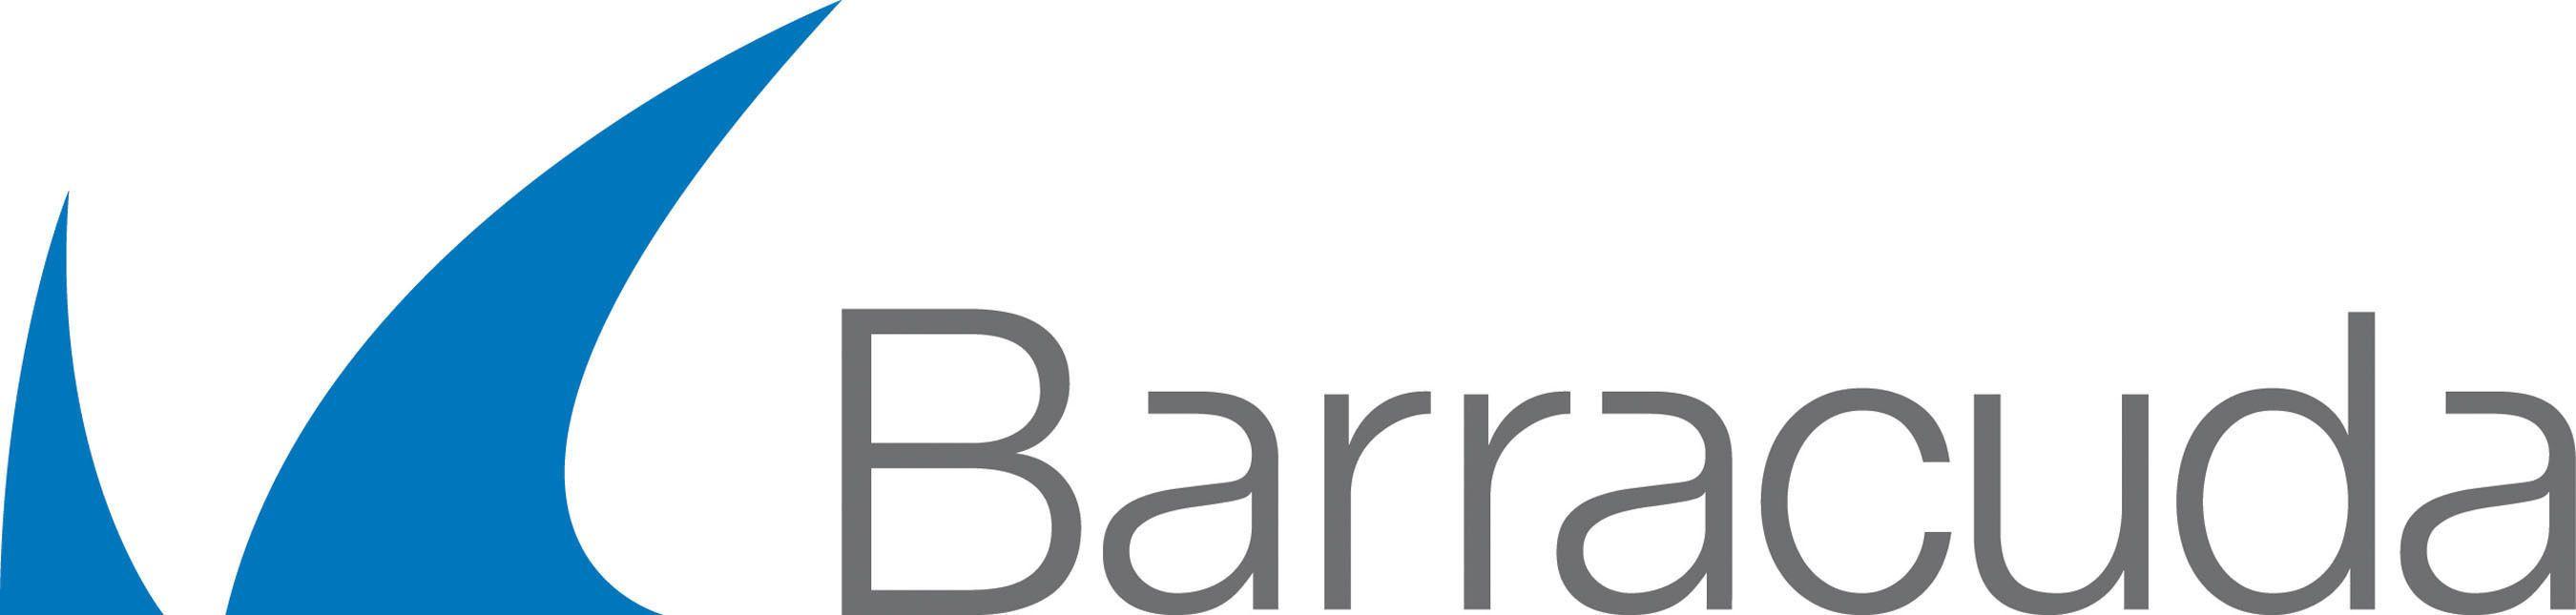 Barracuda Networks Logo - Barracuda Networks Integration